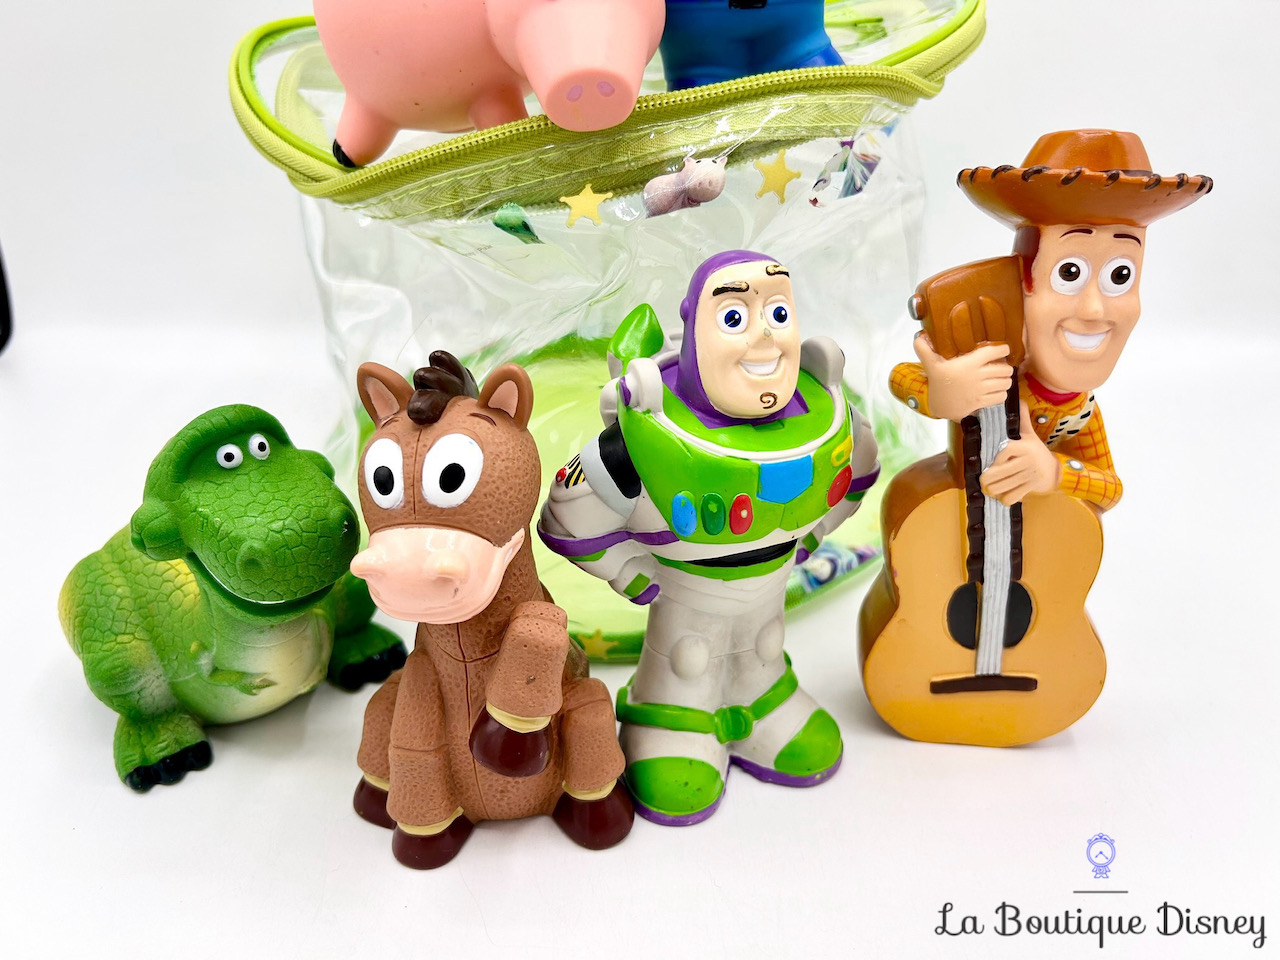 jouets-figurines-de-bain-toy-story-disneyland-paris-disney-pochette-verte-0